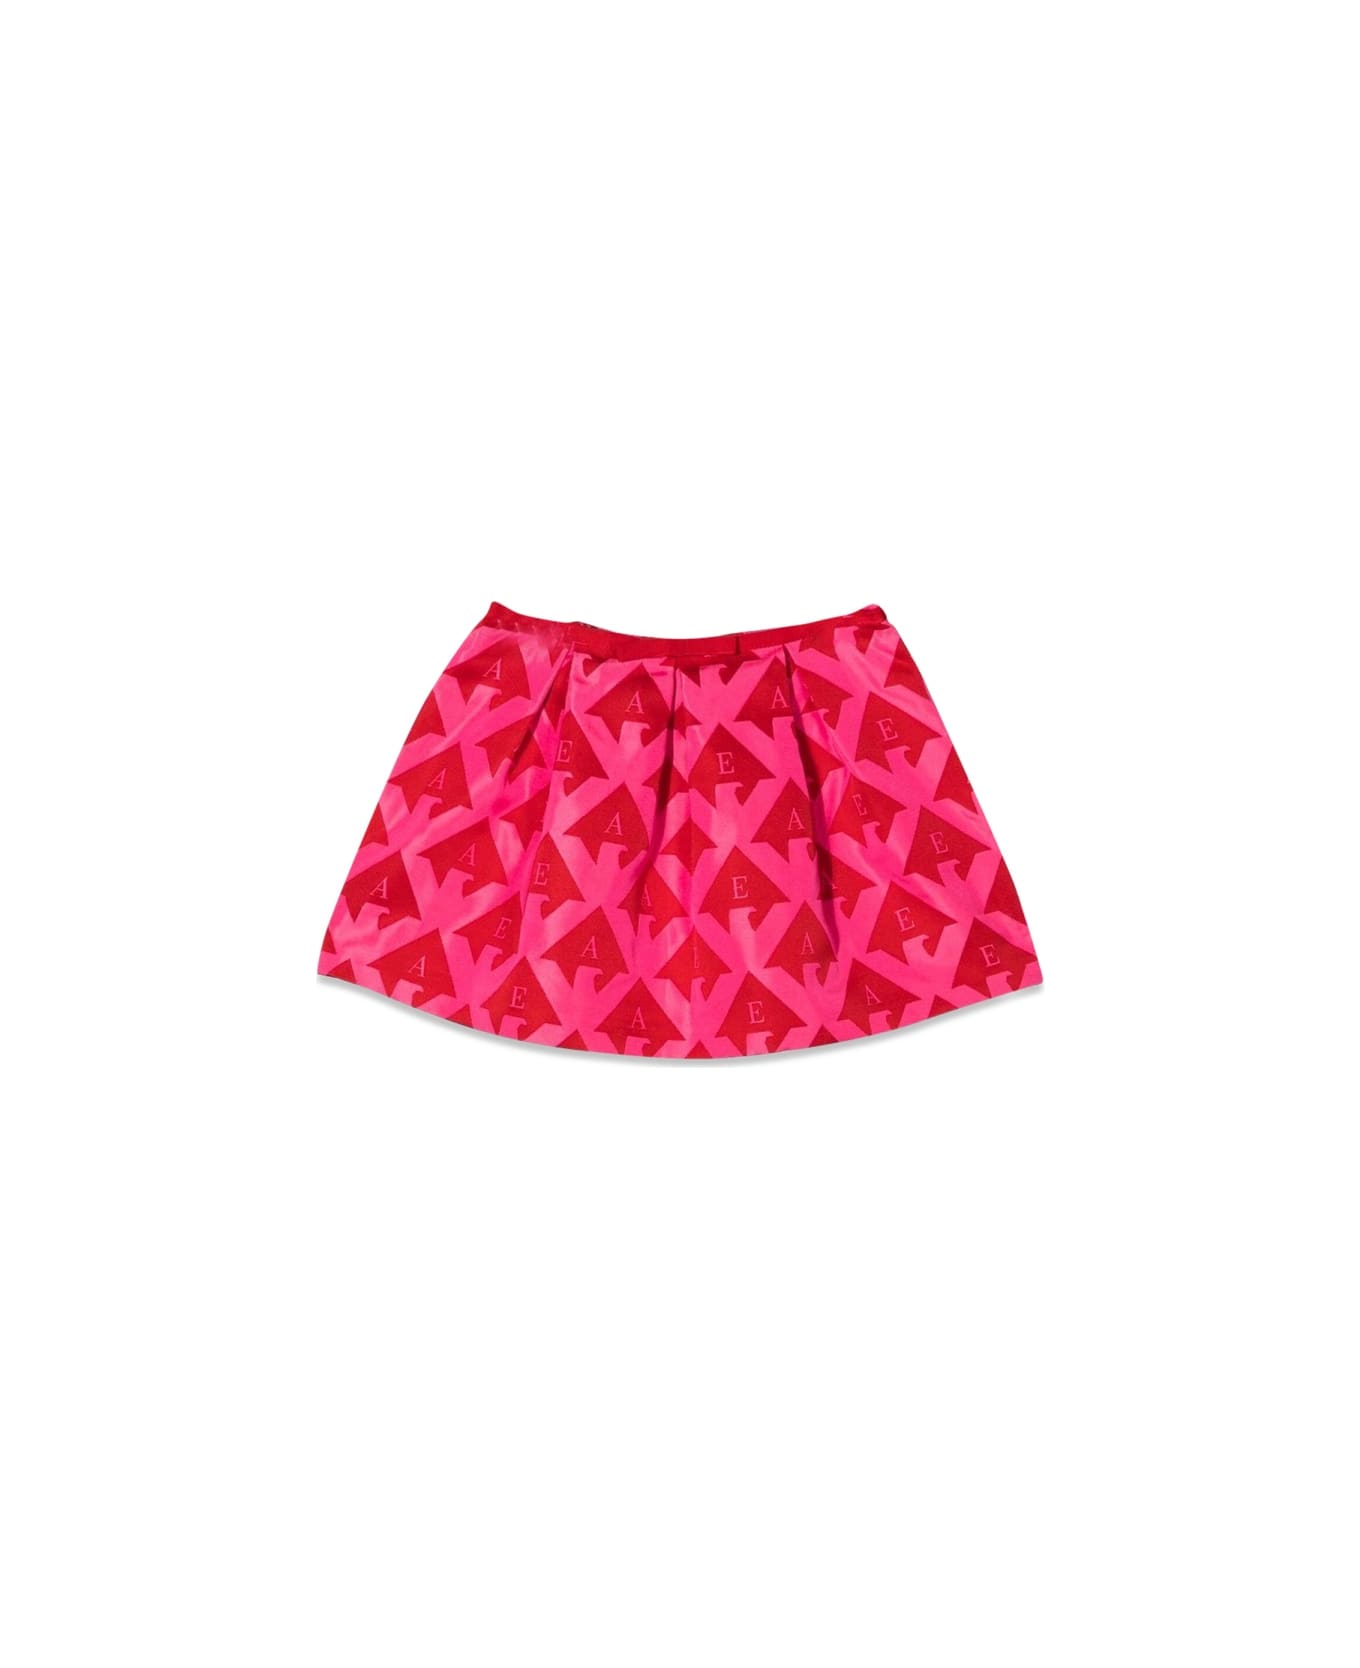 Emporio Armani Skirt - RED